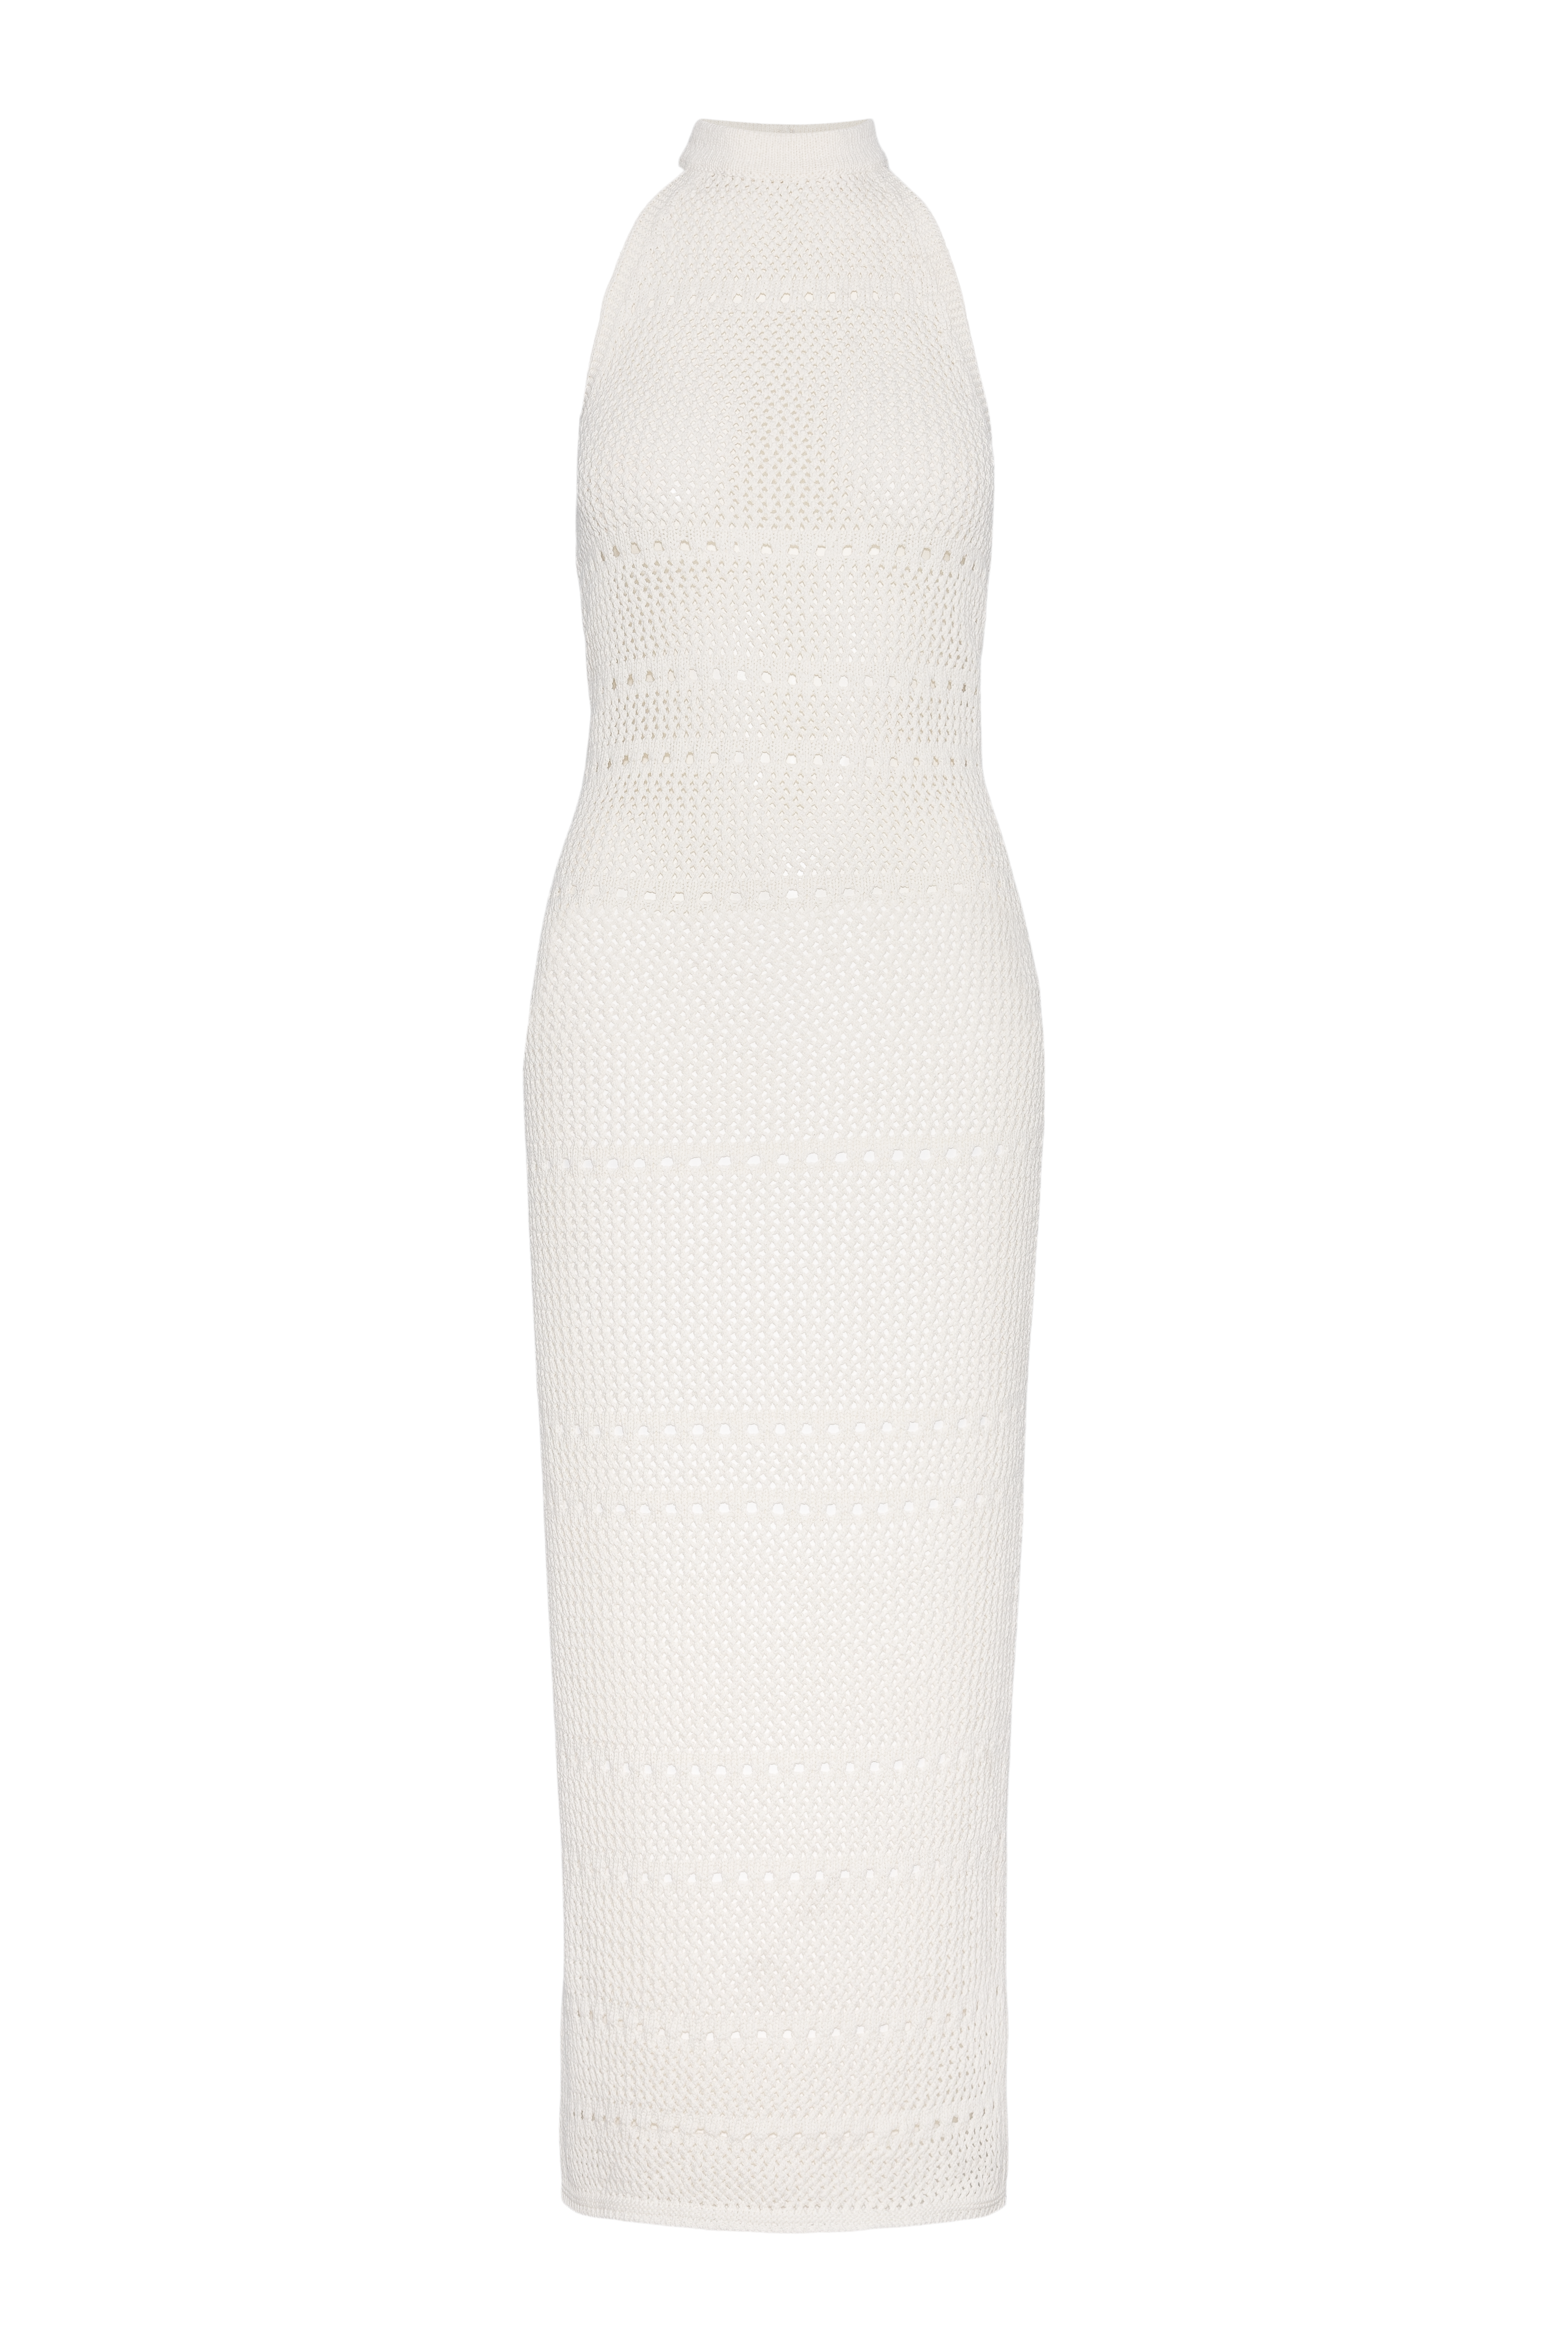 Glastonbury Dress - Cream